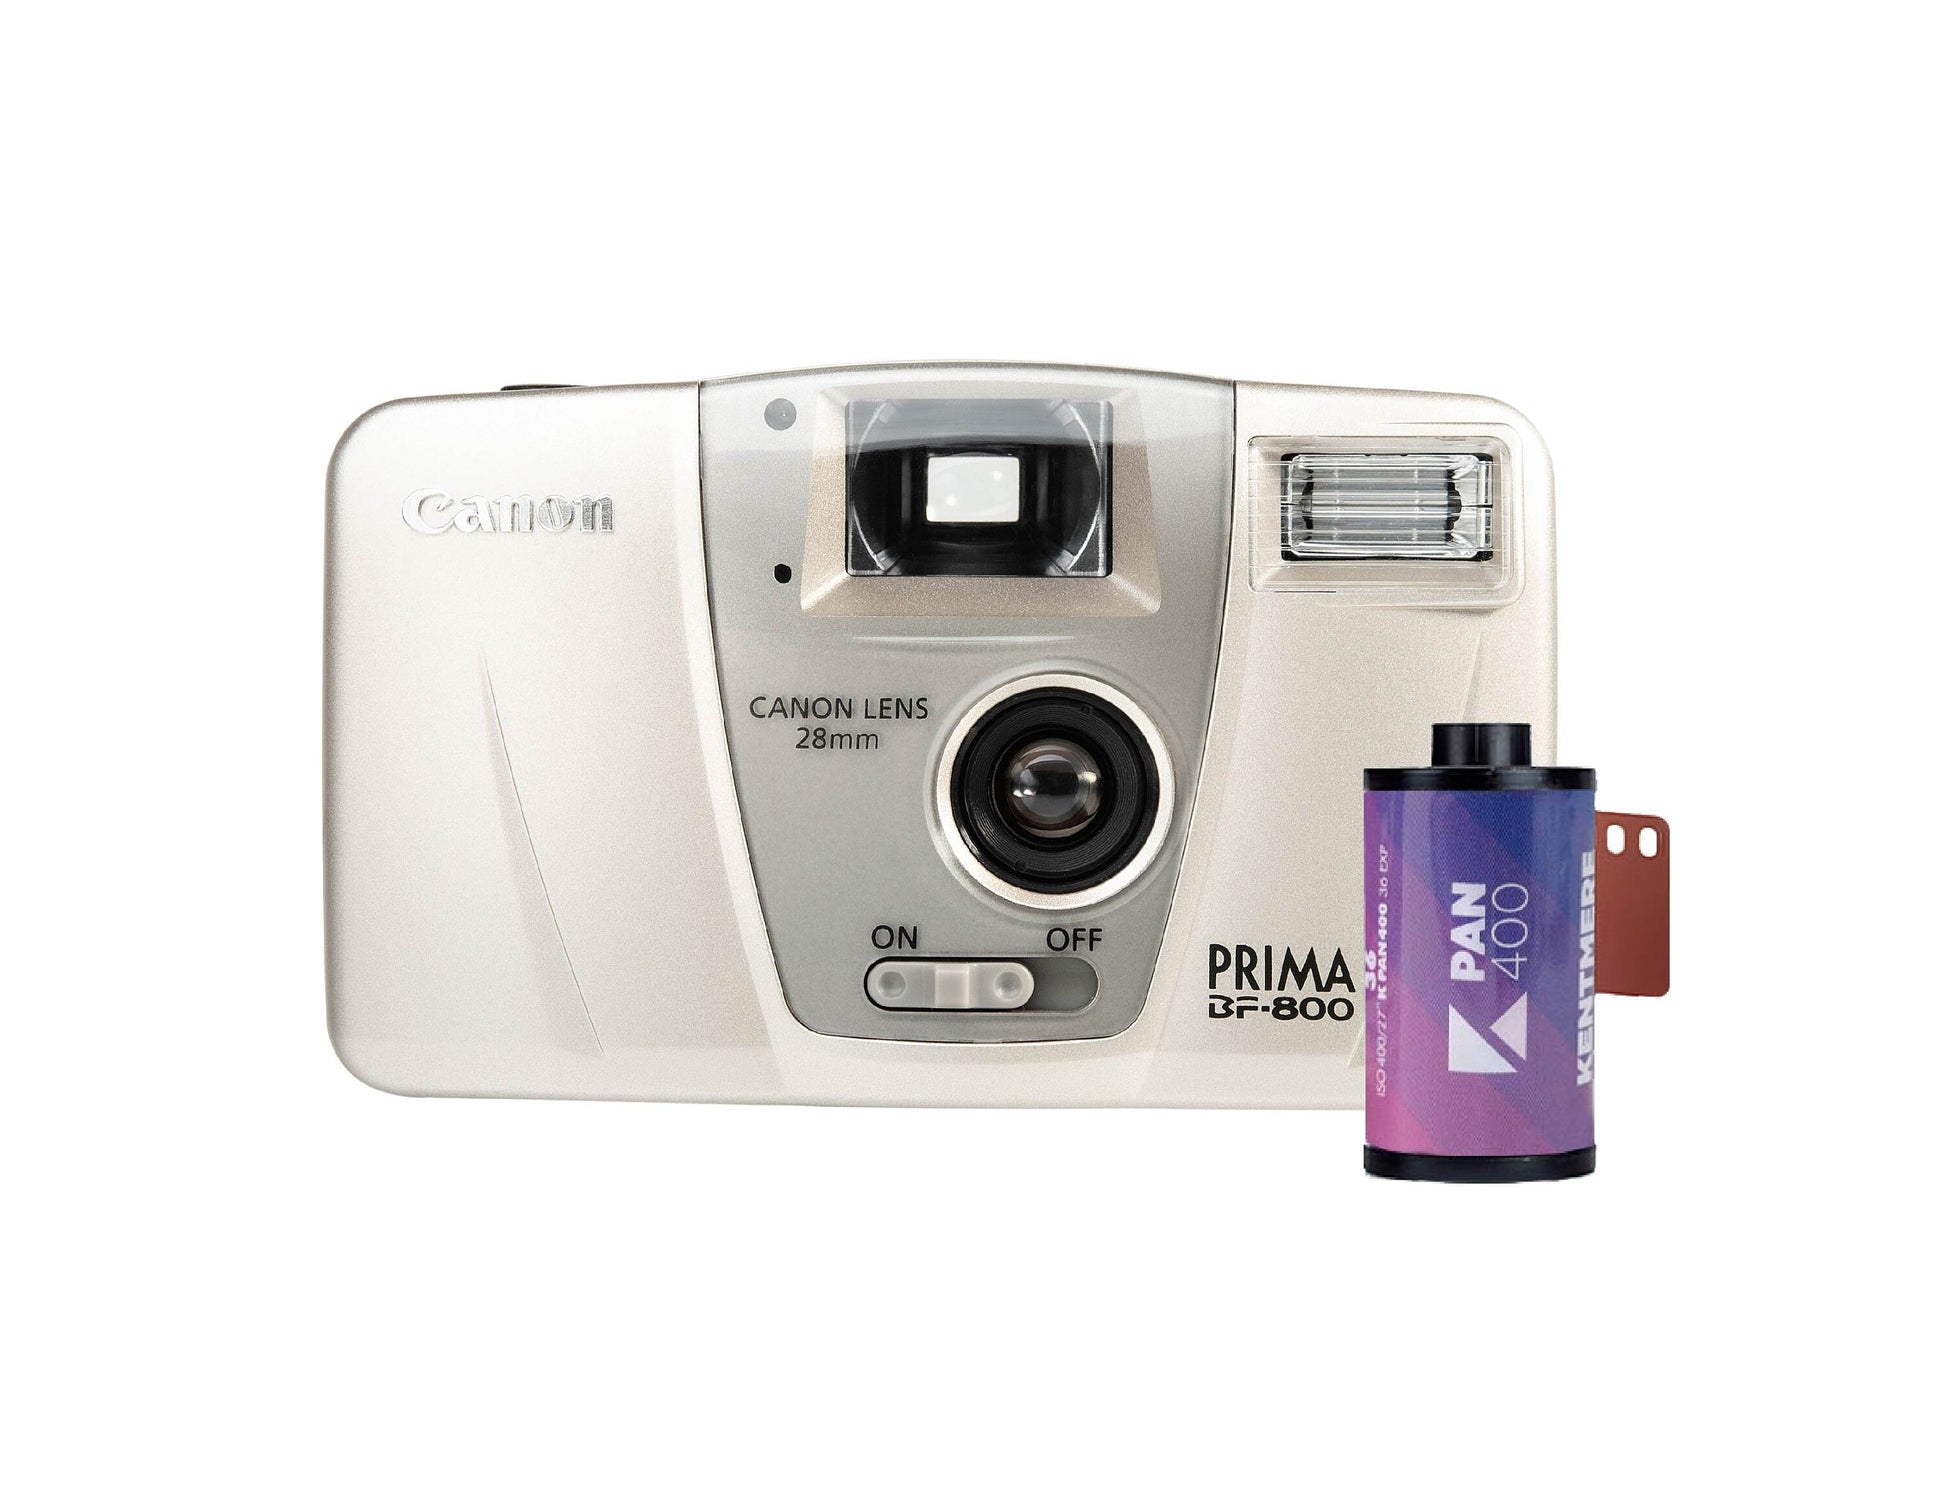 Canon PRIMA BF-800, Vintage Camera, 35 mm film camera, Canon camera, vintage shutter, Birthday gift, Photographer gift - Vintage Polaroid Instant Cameras